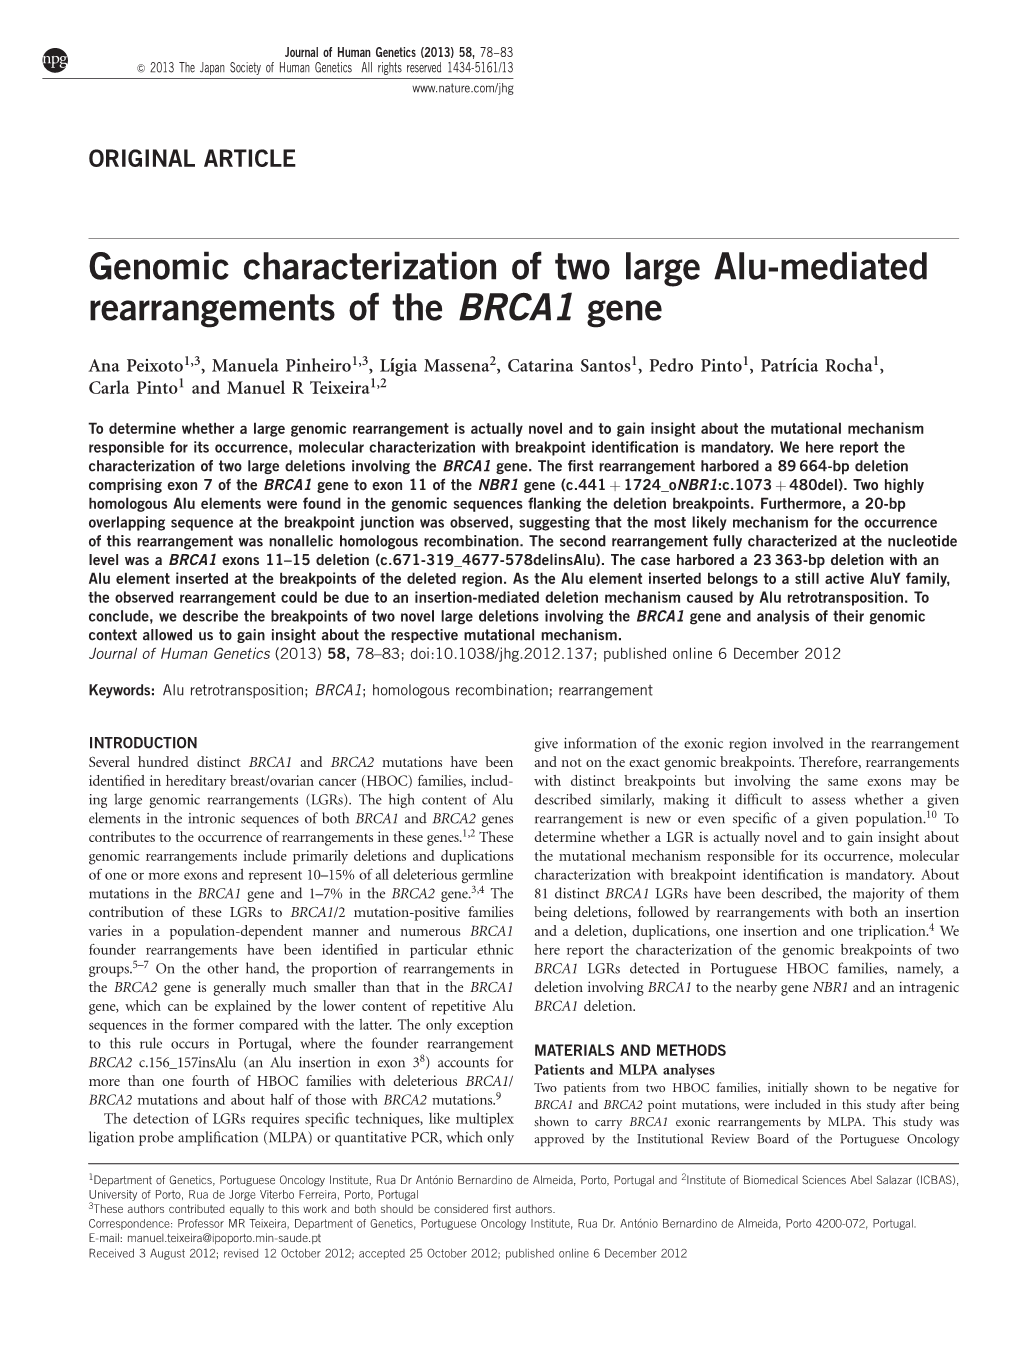 Genomic Characterization of Two Large Alu-Mediated Rearrangements of the BRCA1 Gene